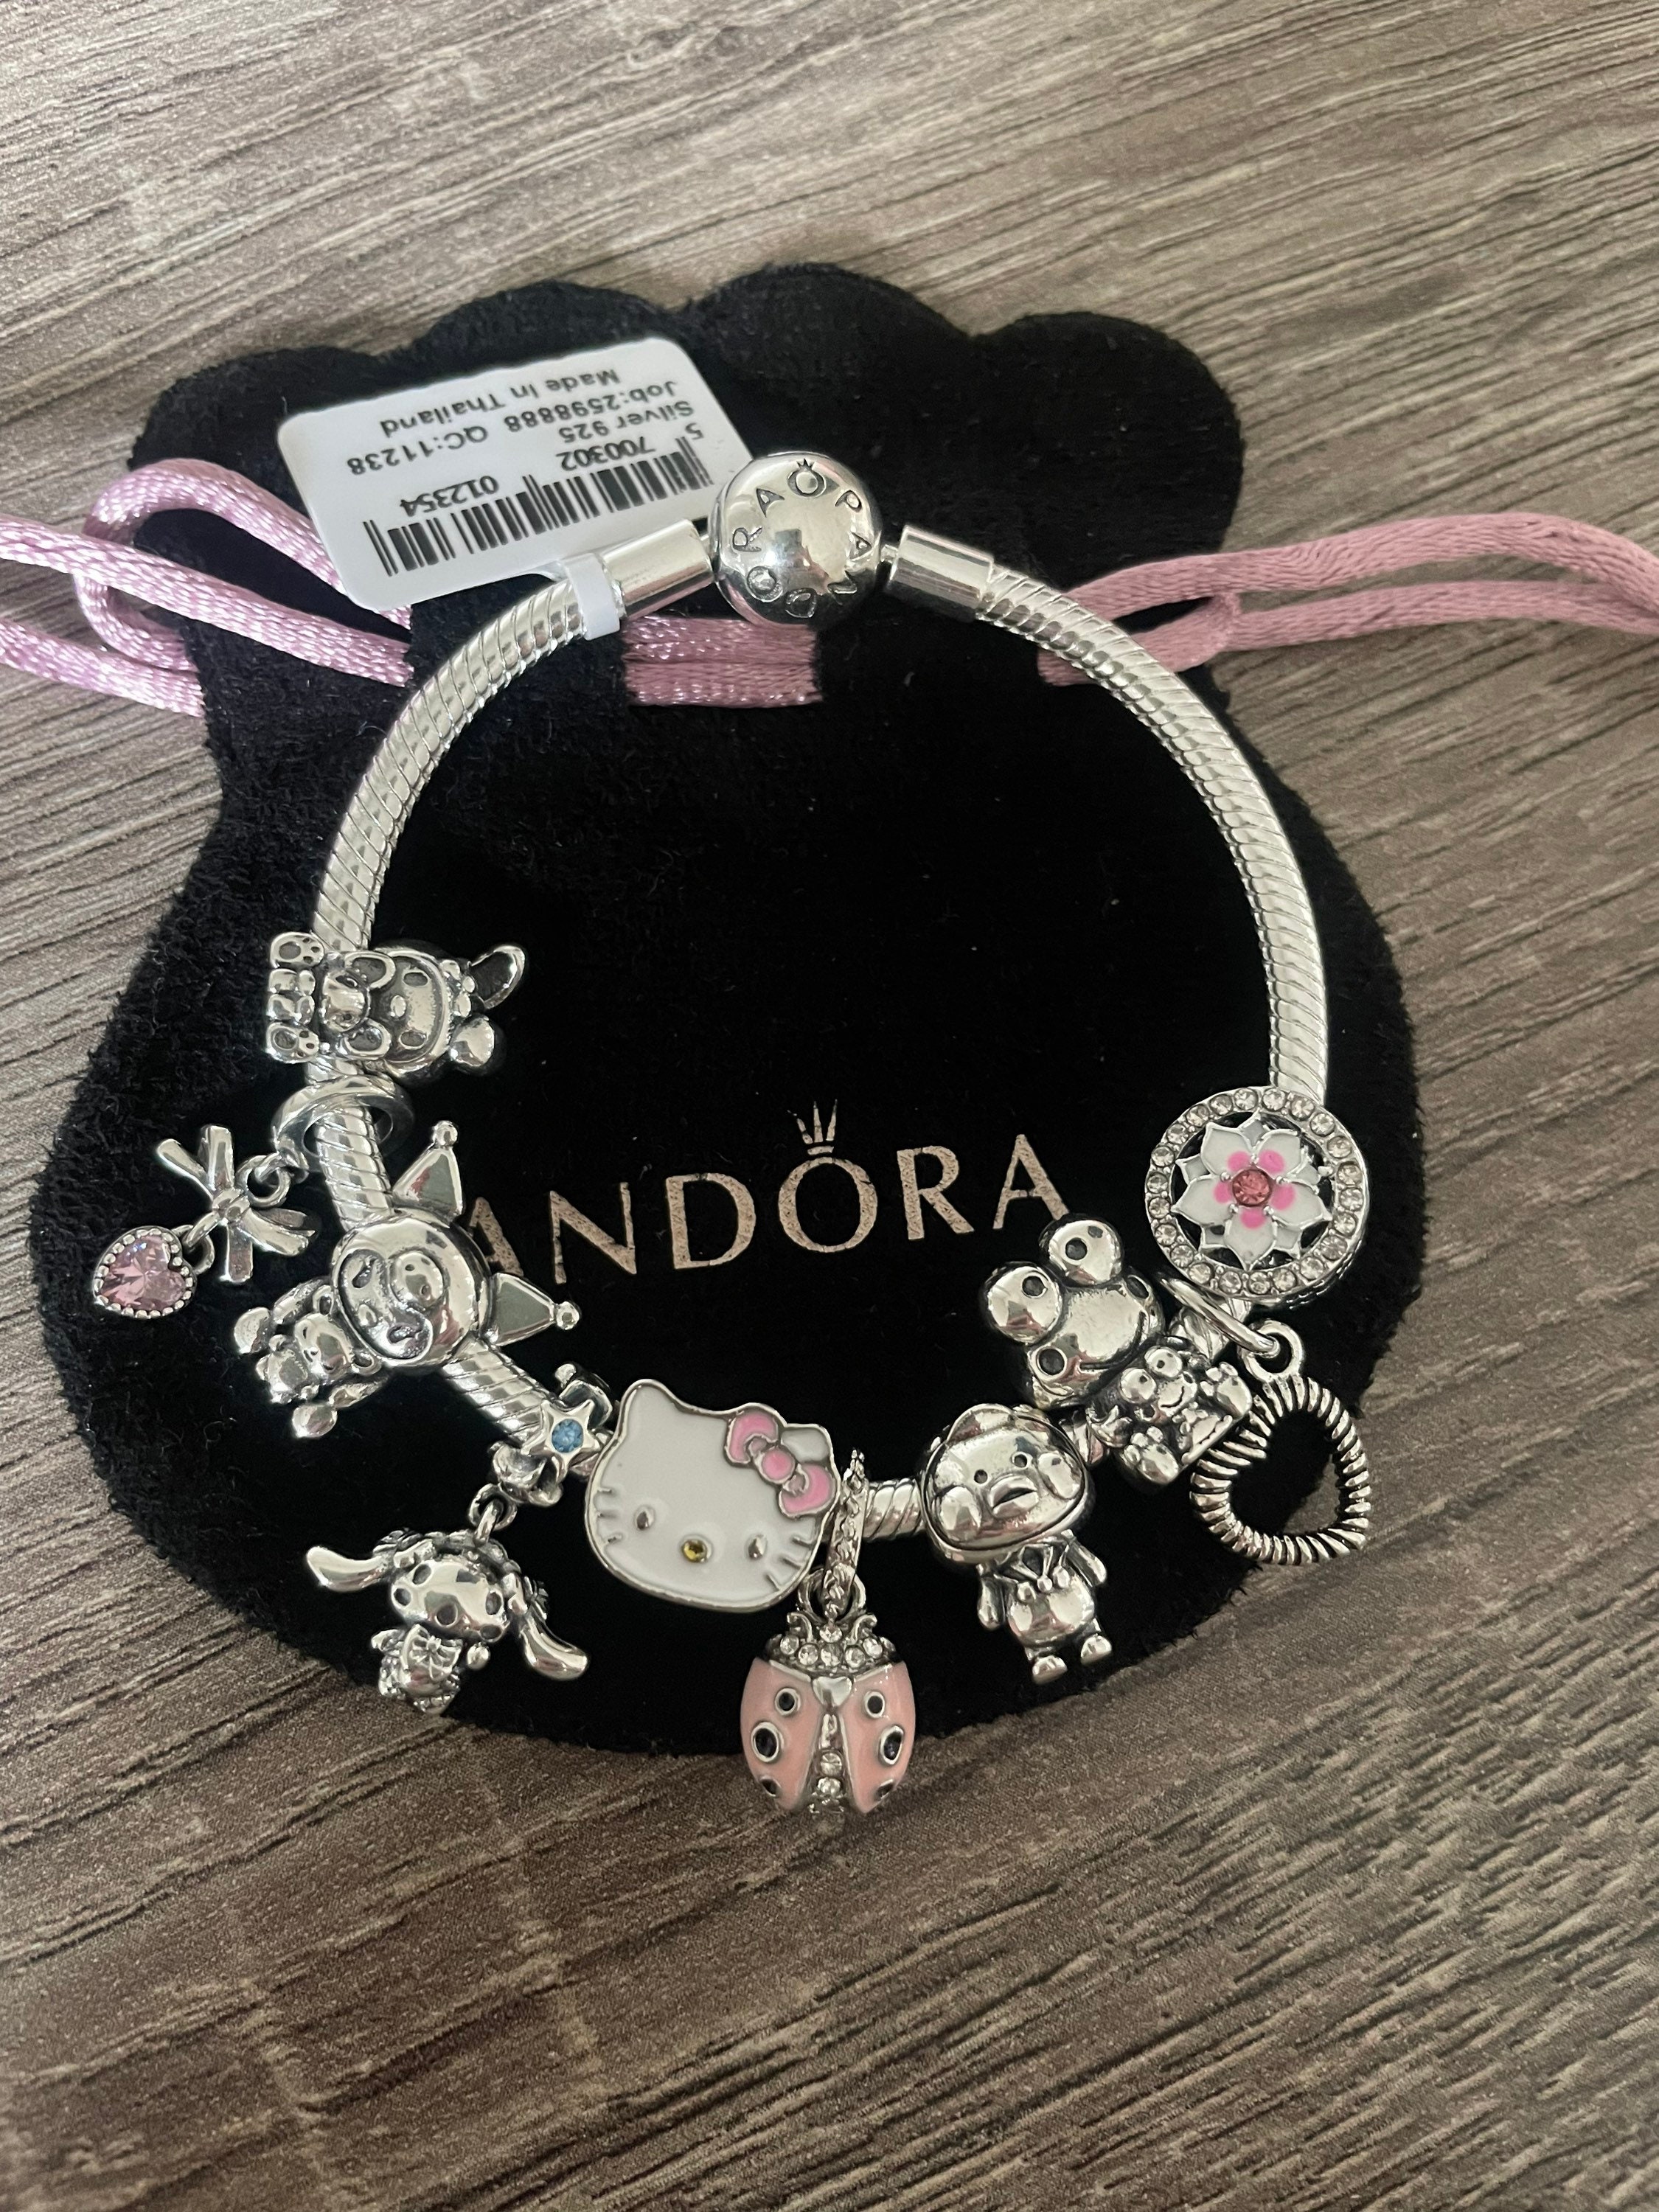 Sanrio Hello Kitty Women's Silver Plated Charm Bracelet, 8